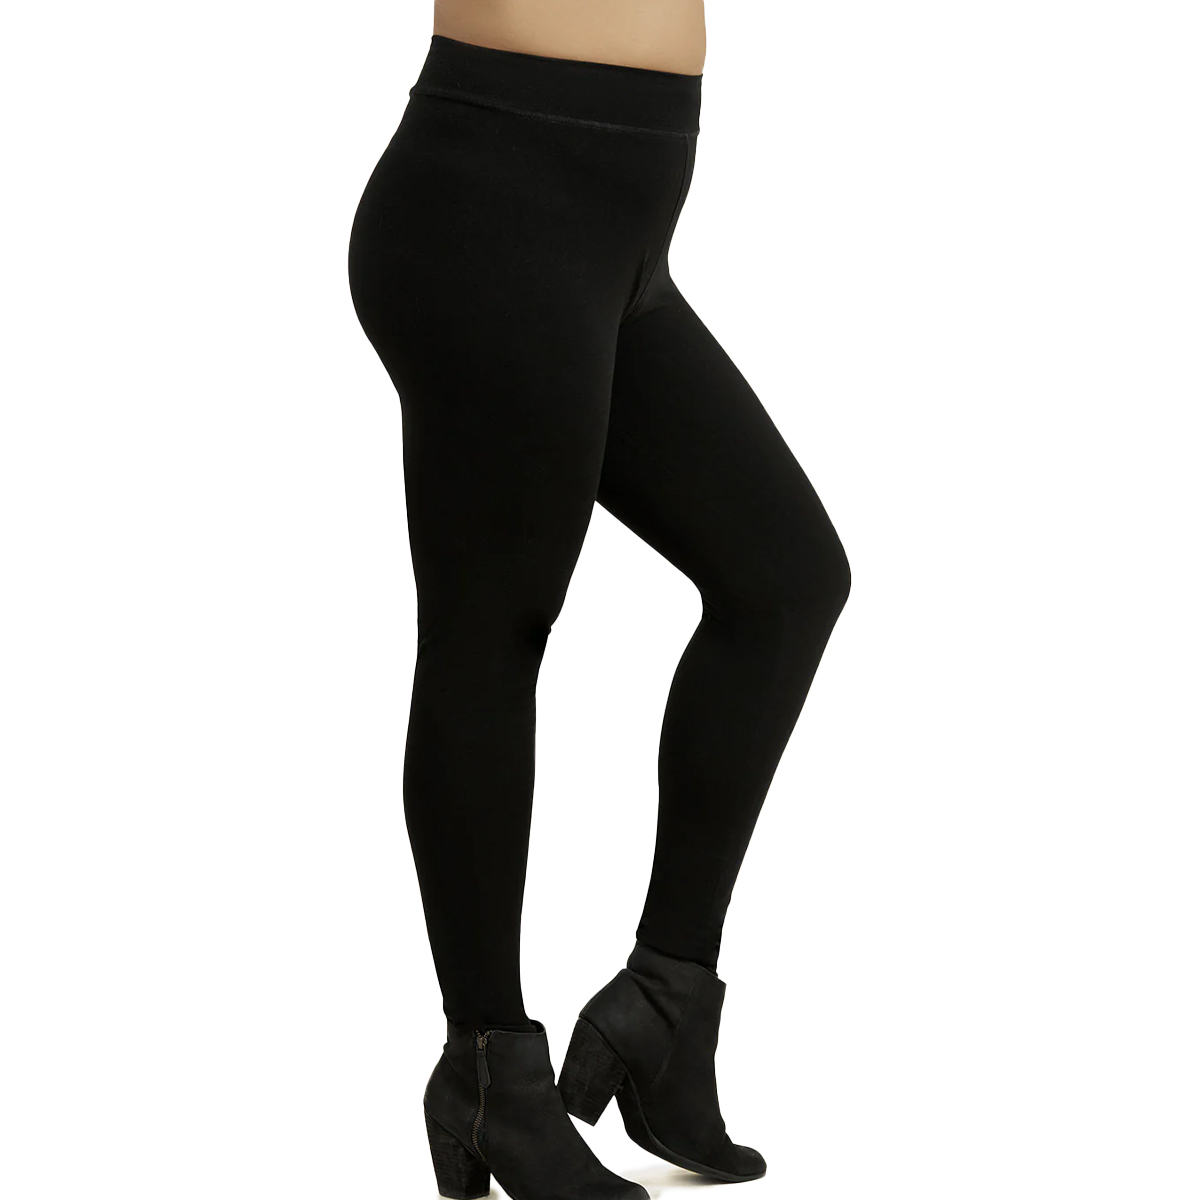 Wholesale Women's Plus Size Leggings in Black, 3XL - DollarDays